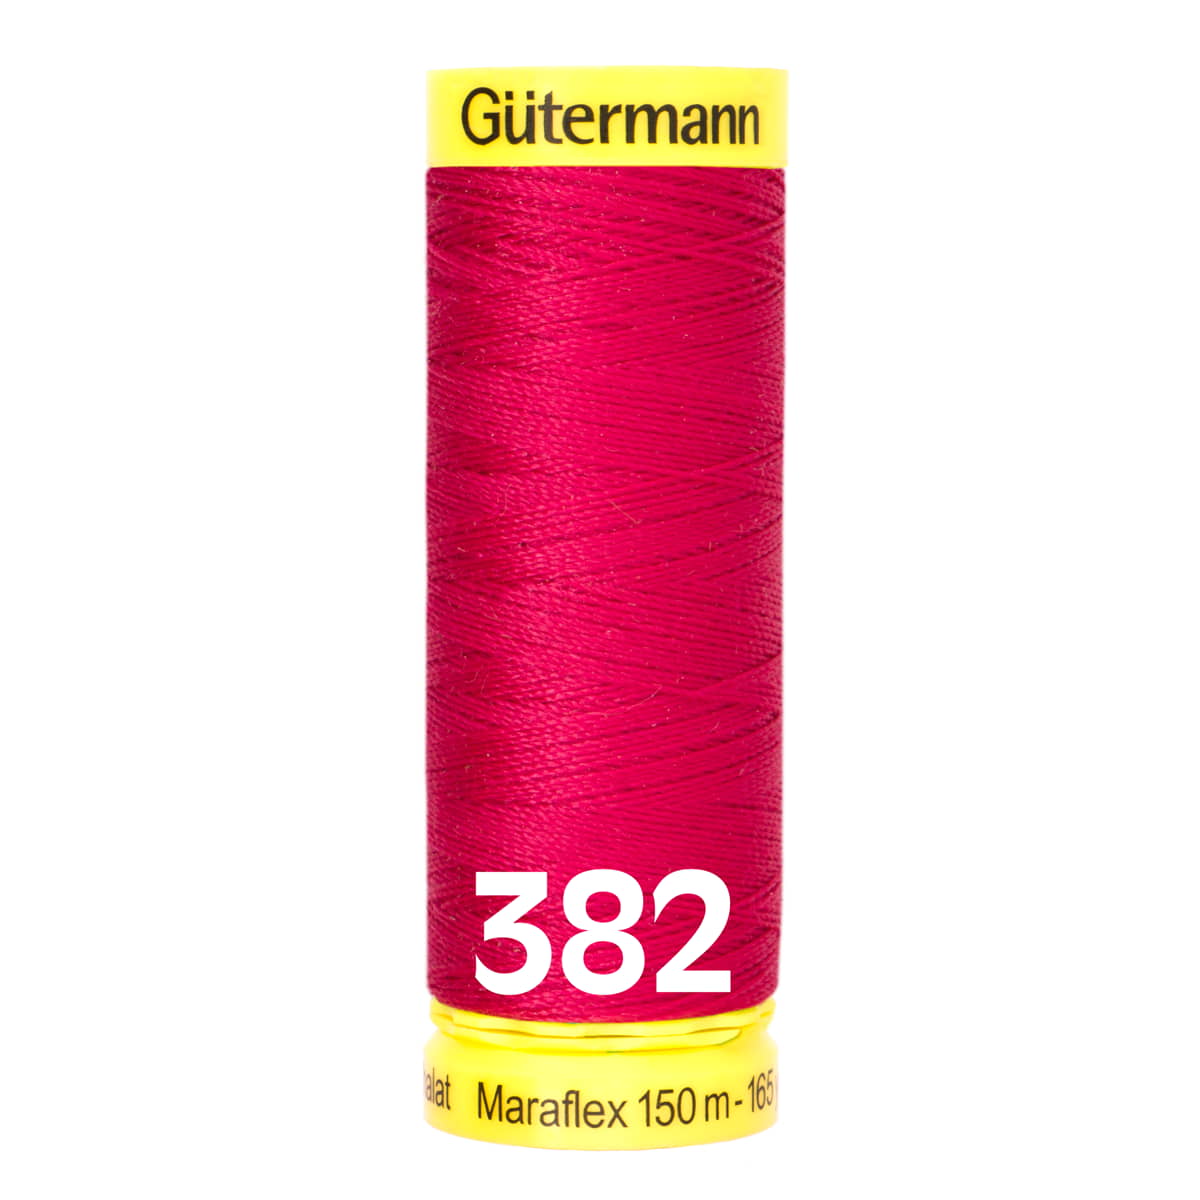 Gütermann MaraFlex 150m - 382 fuchia GUTERMANN-MARAFLEX-150-382 4029394998782 - Fourniturenkraam.nl